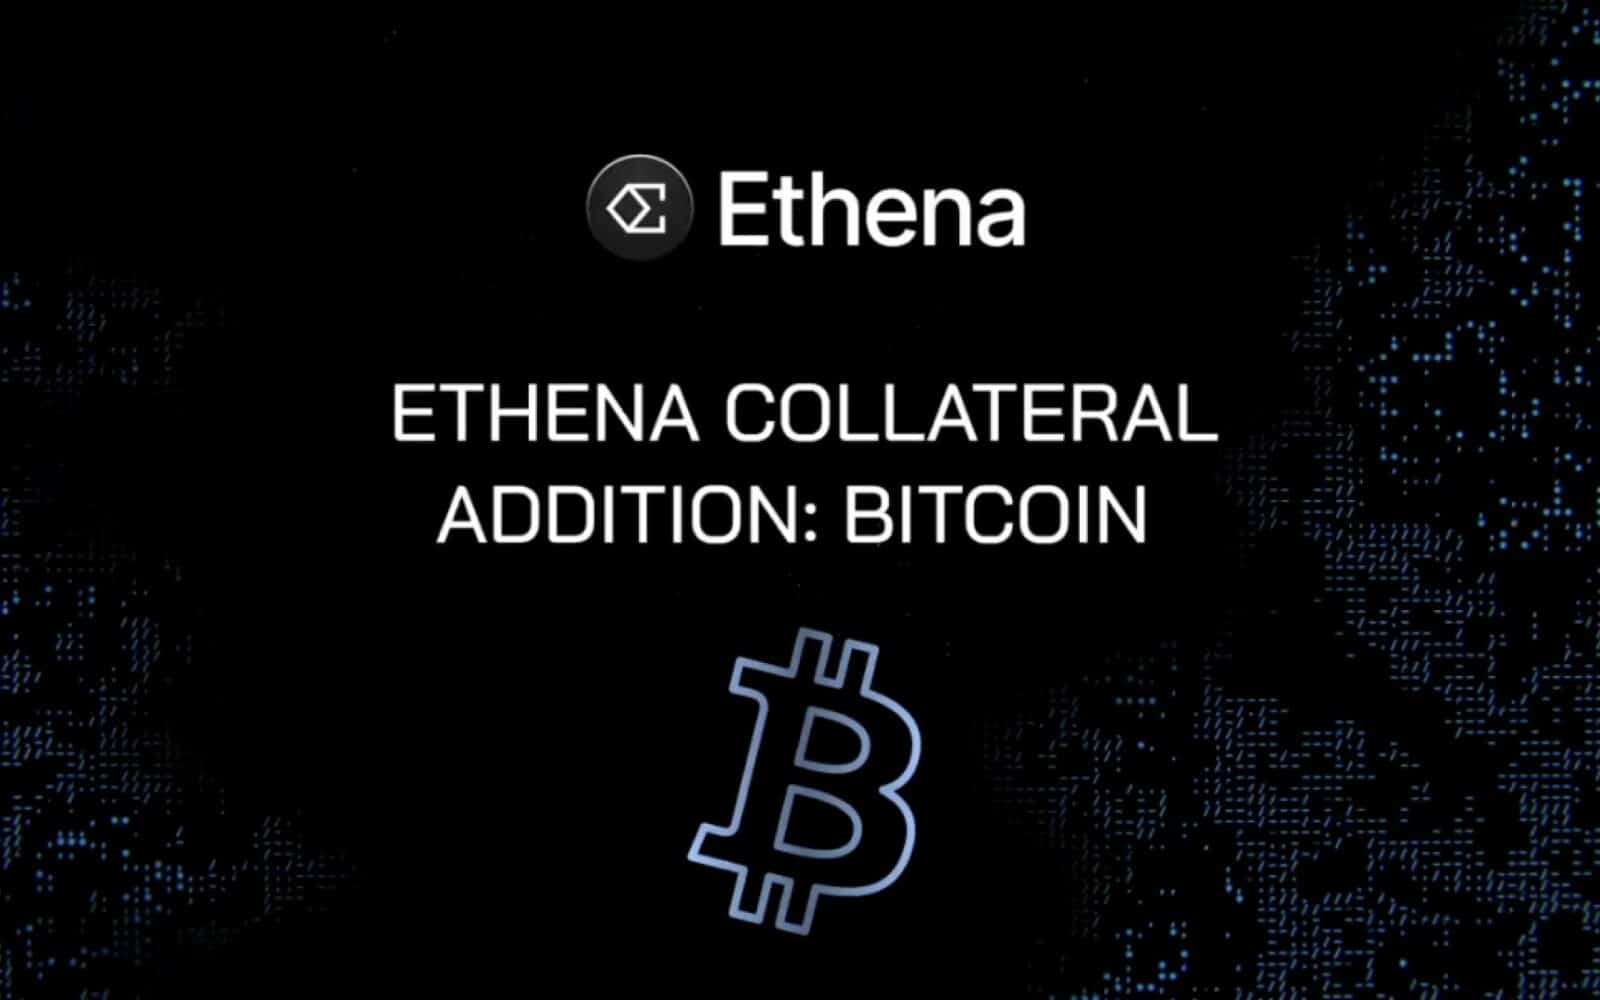 ethena bitcoin btc stablecoin strategie